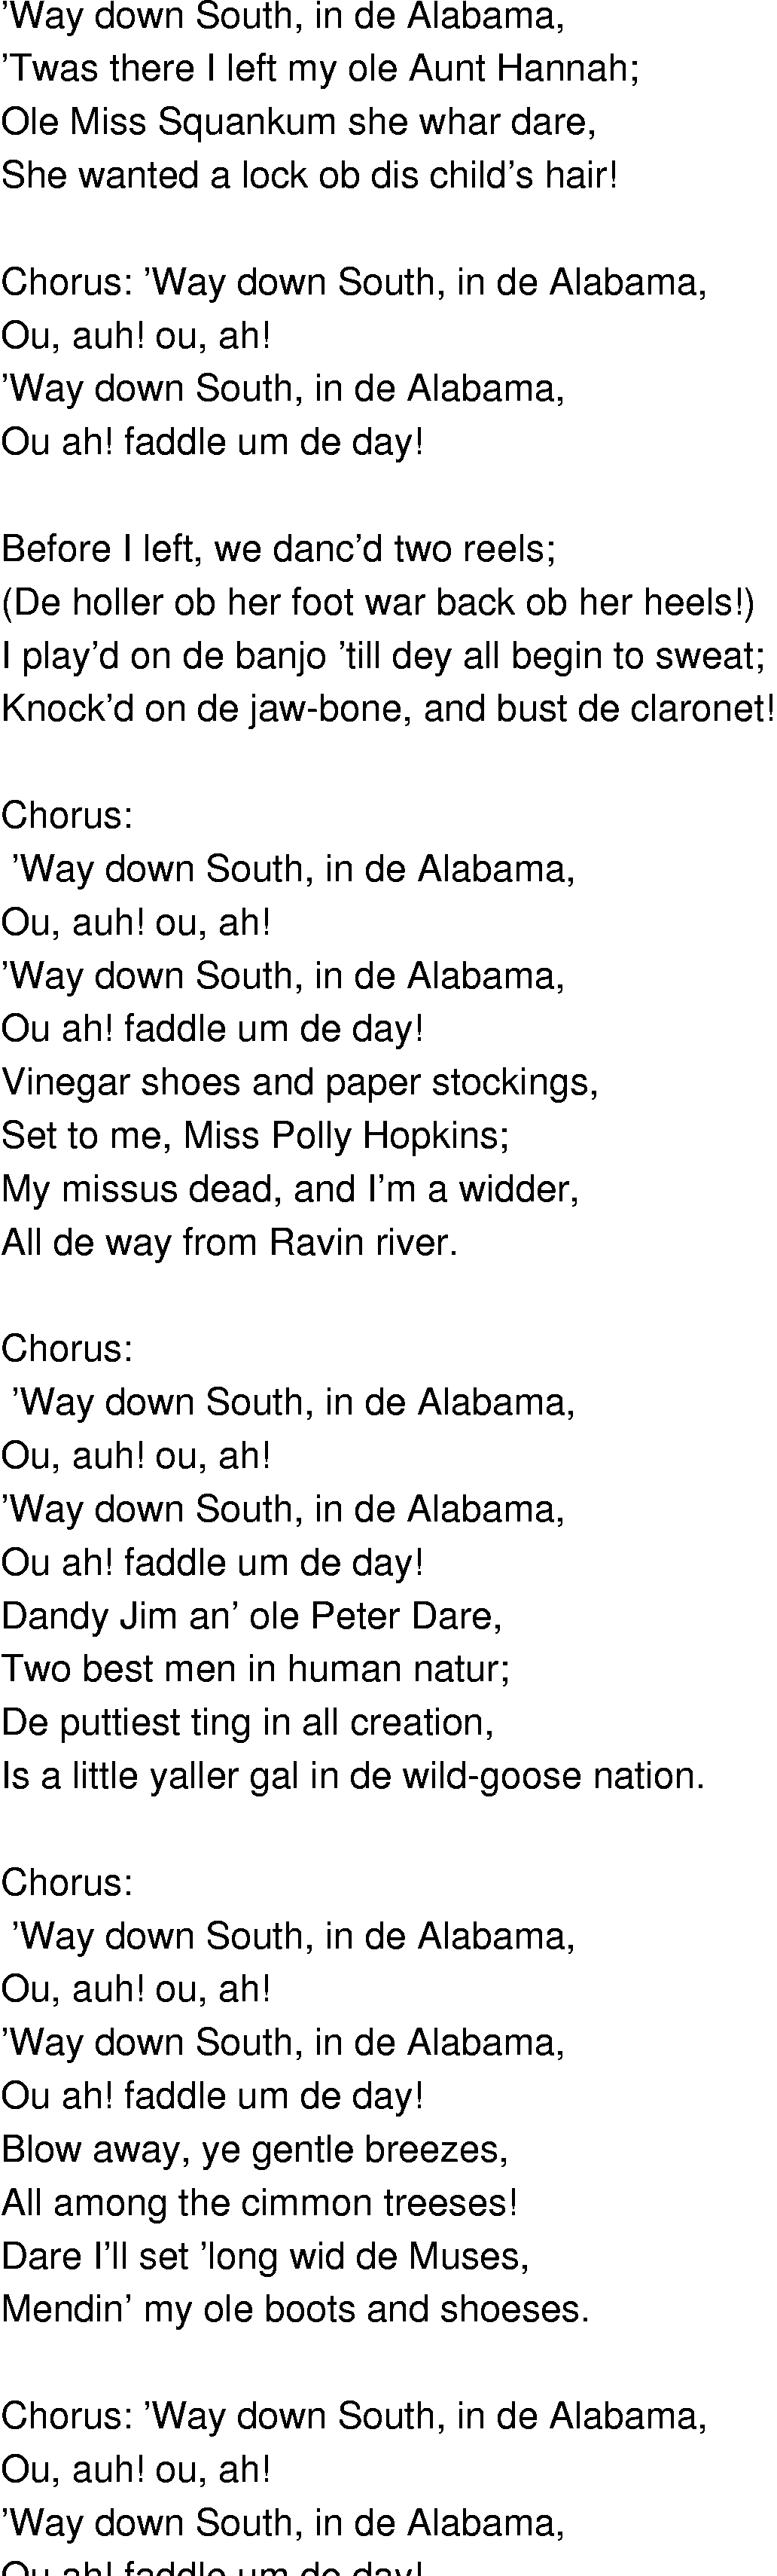 Old-Time (oldtimey) Song Lyrics - down in alabam